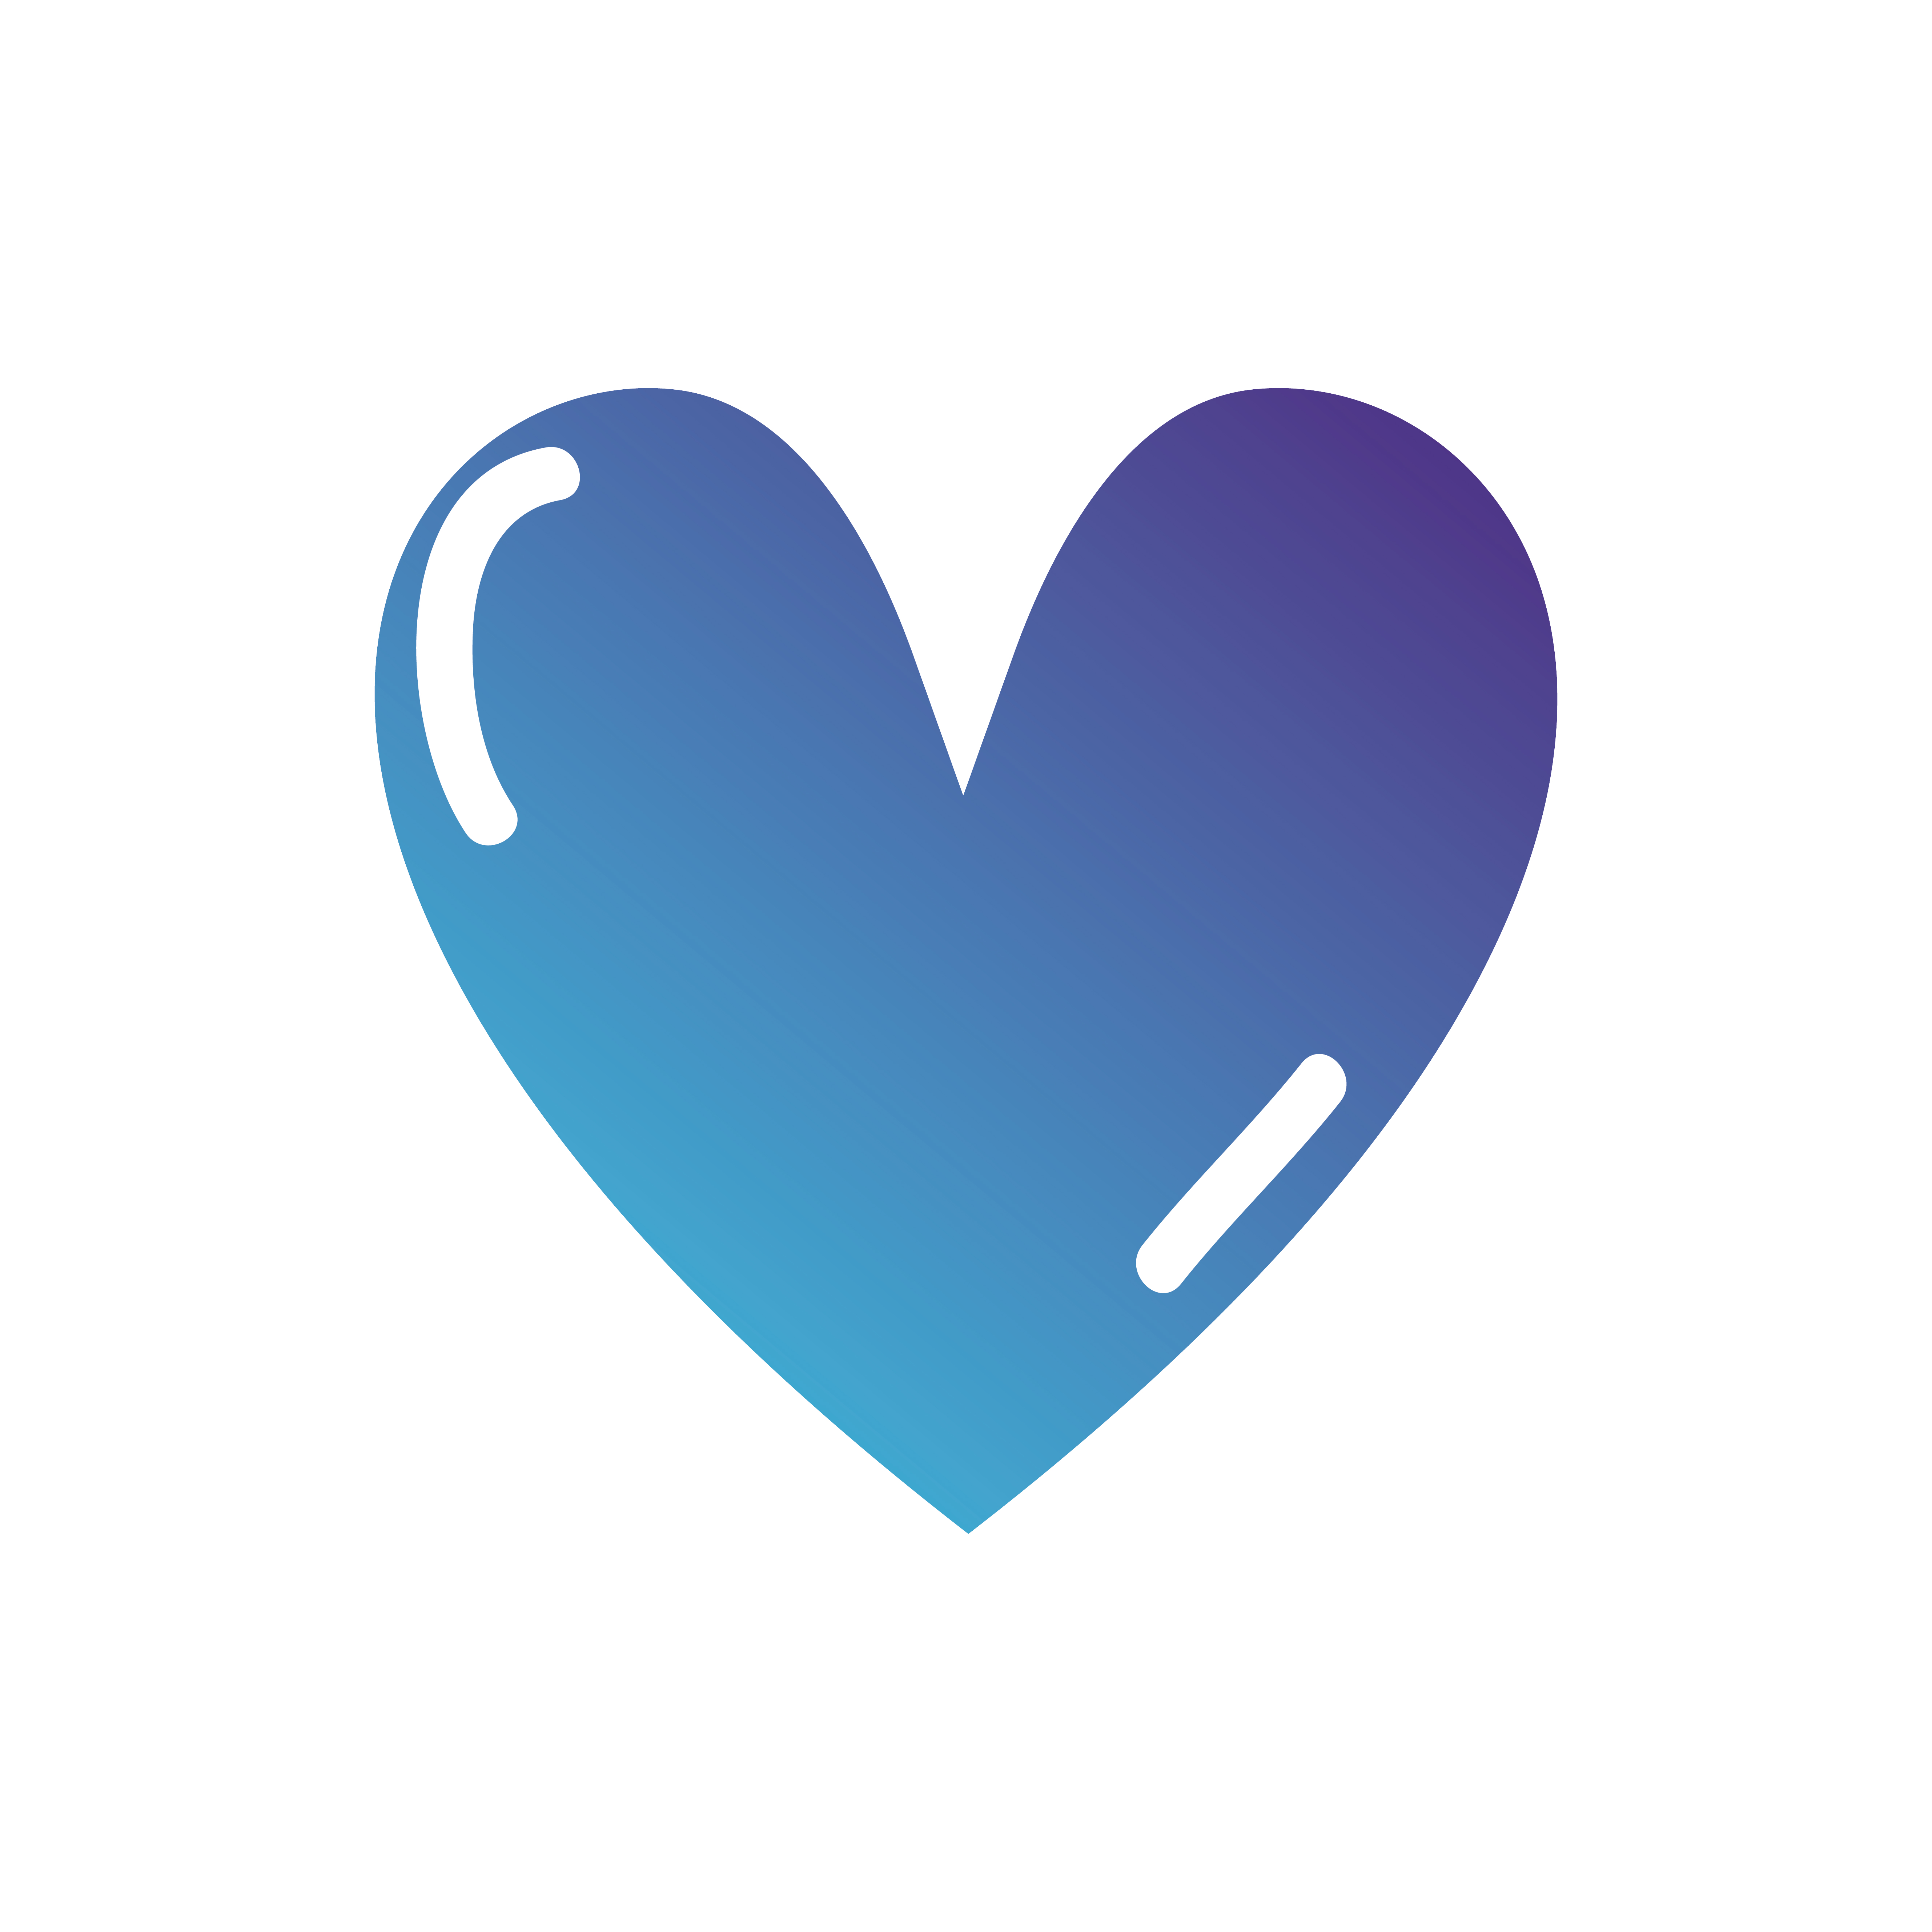 Download silhouette heart symbol love design - Download Free Vectors, Clipart Graphics & Vector Art